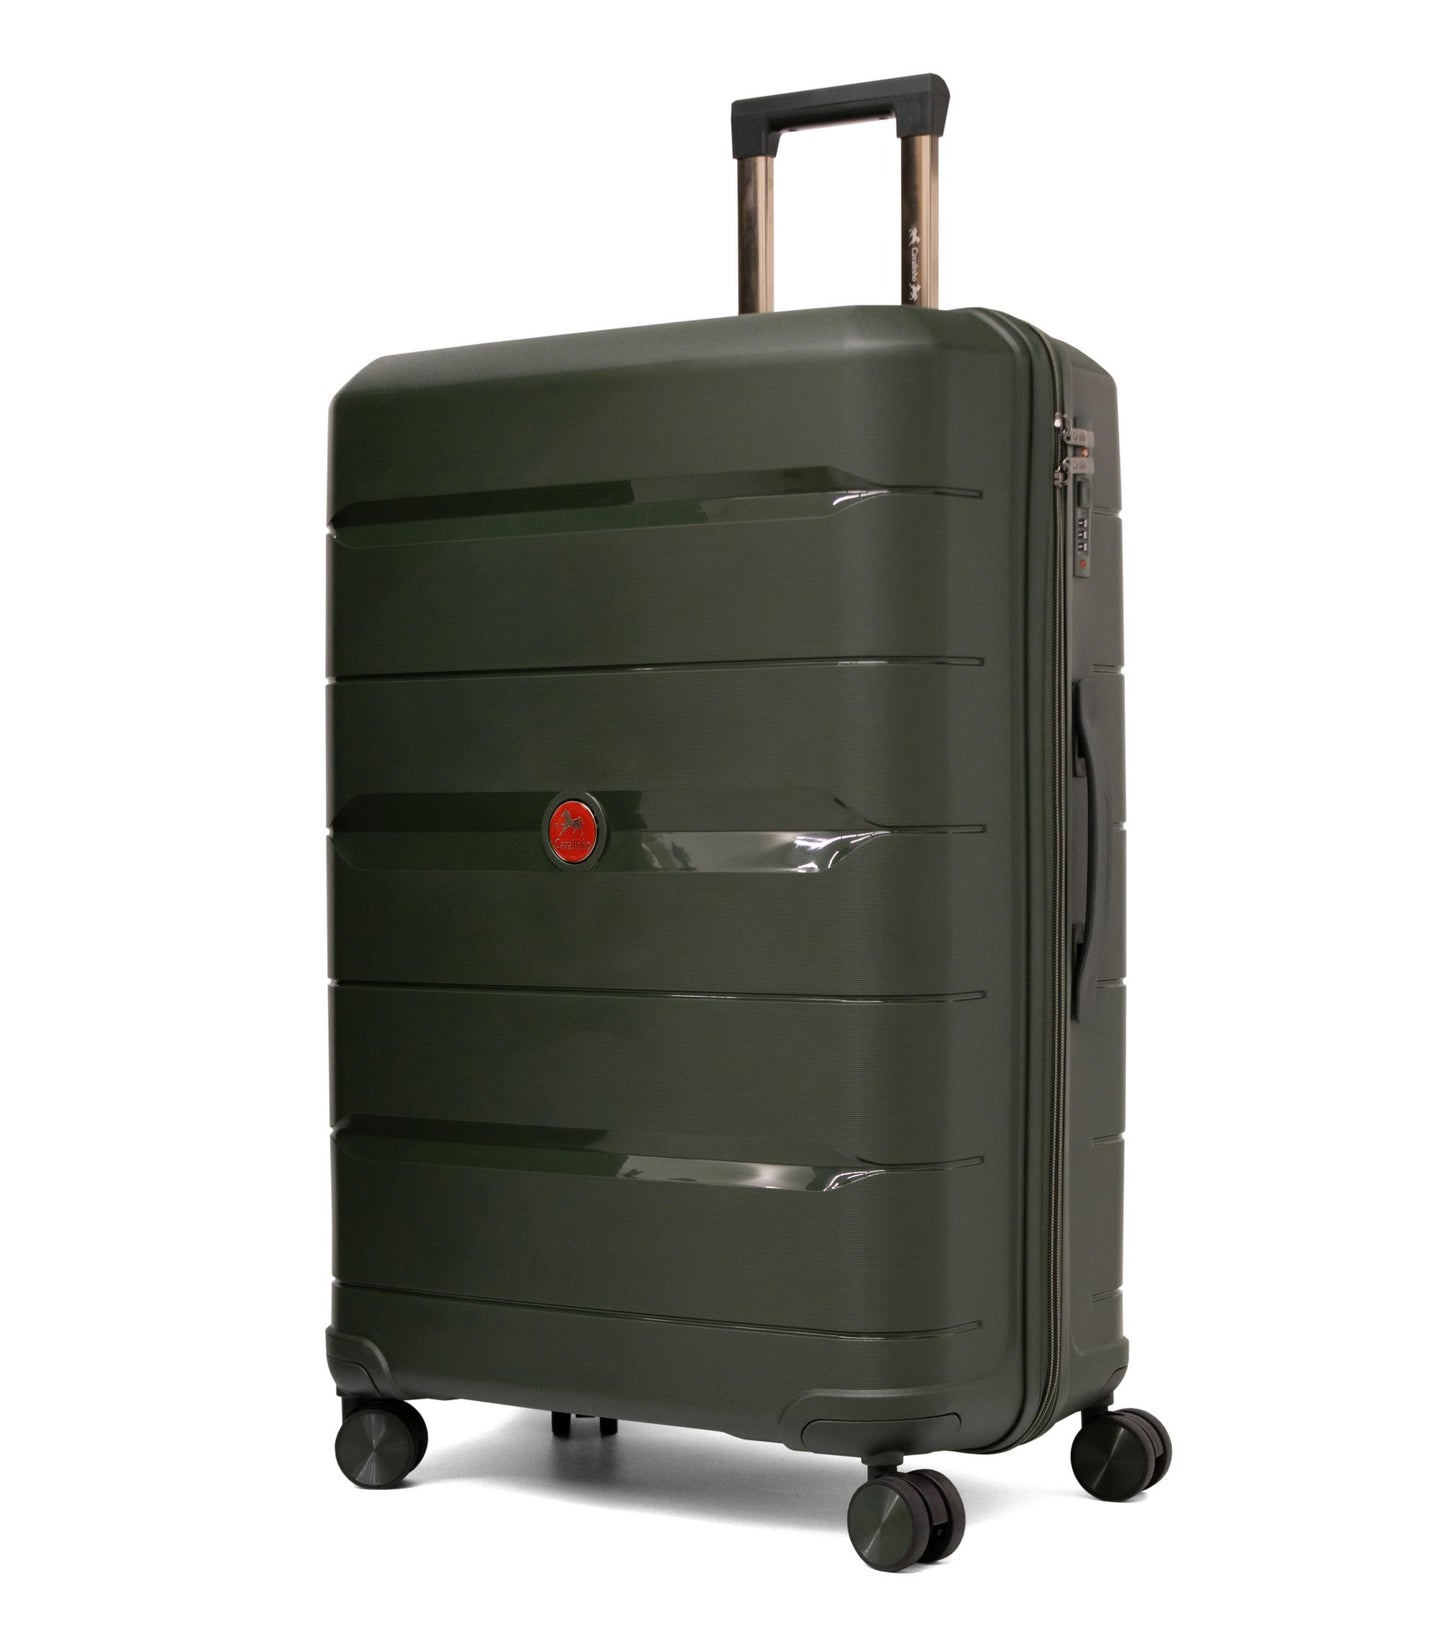 Cavalinho Oasis Check-in Hardside Luggage (28") - 28 inch DarkOliveGreen - 68040001.09.28_2